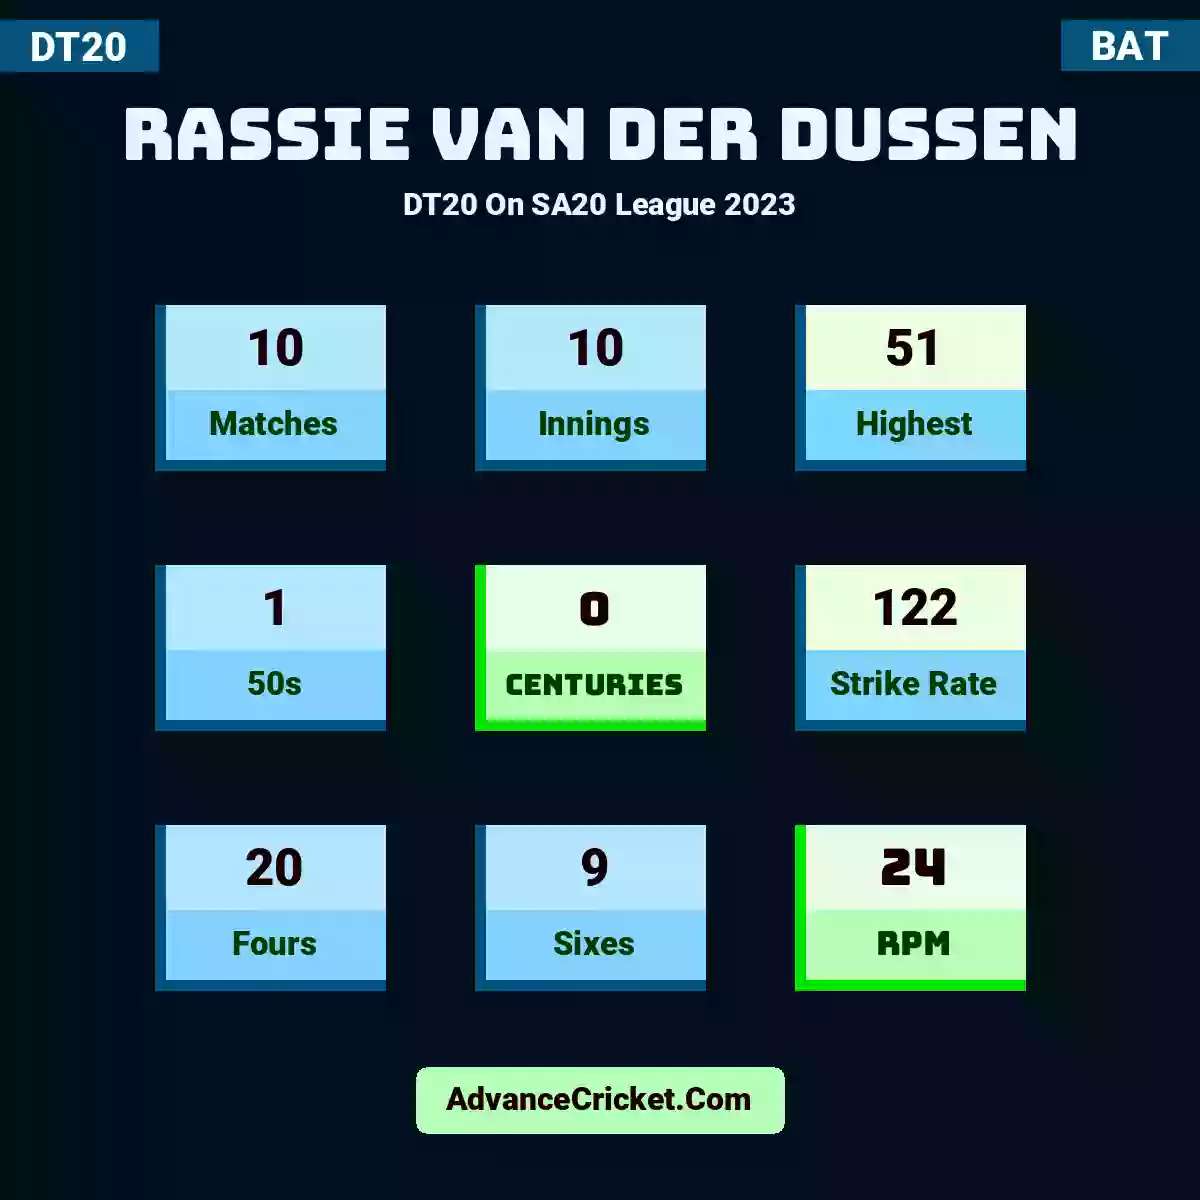 Rassie van der Dussen DT20  On SA20 League 2023, Rassie van der Dussen played 10 matches, scored 51 runs as highest, 1 half-centuries, and 0 centuries, with a strike rate of 122. R.Dussen hit 20 fours and 9 sixes, with an RPM of 24.